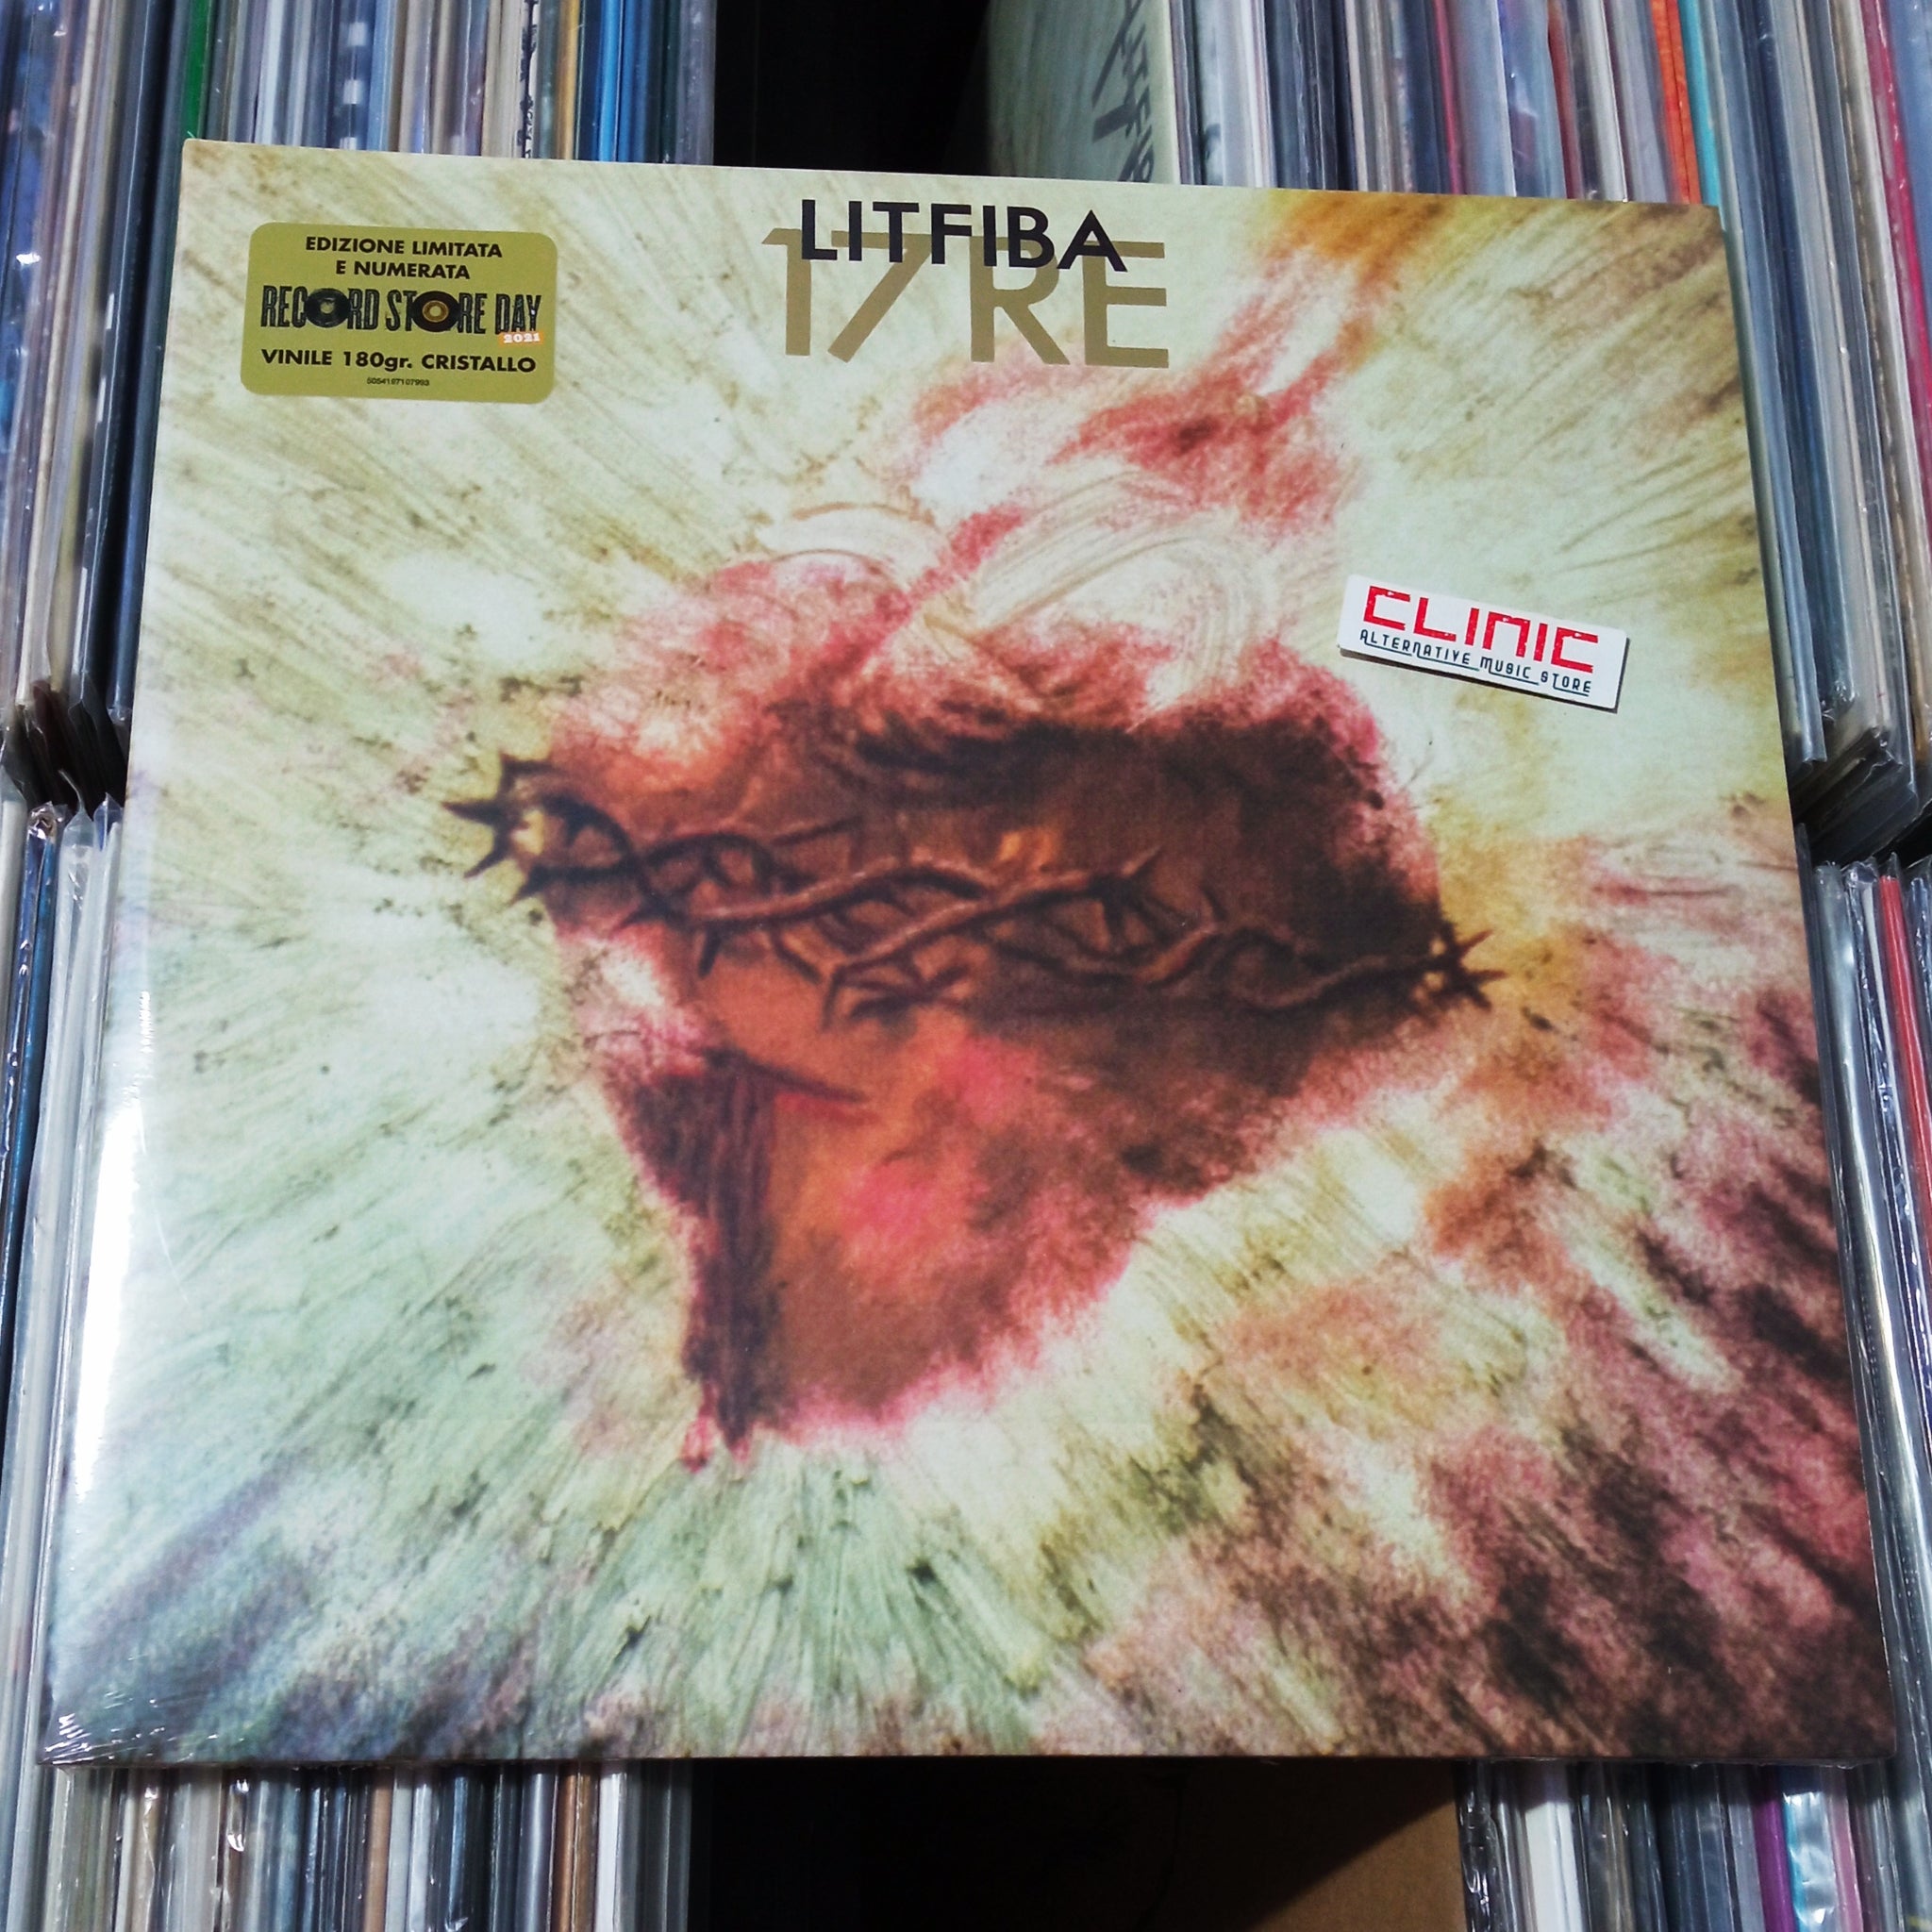 LP - LITFIBA - 17 RE - Record Store Day